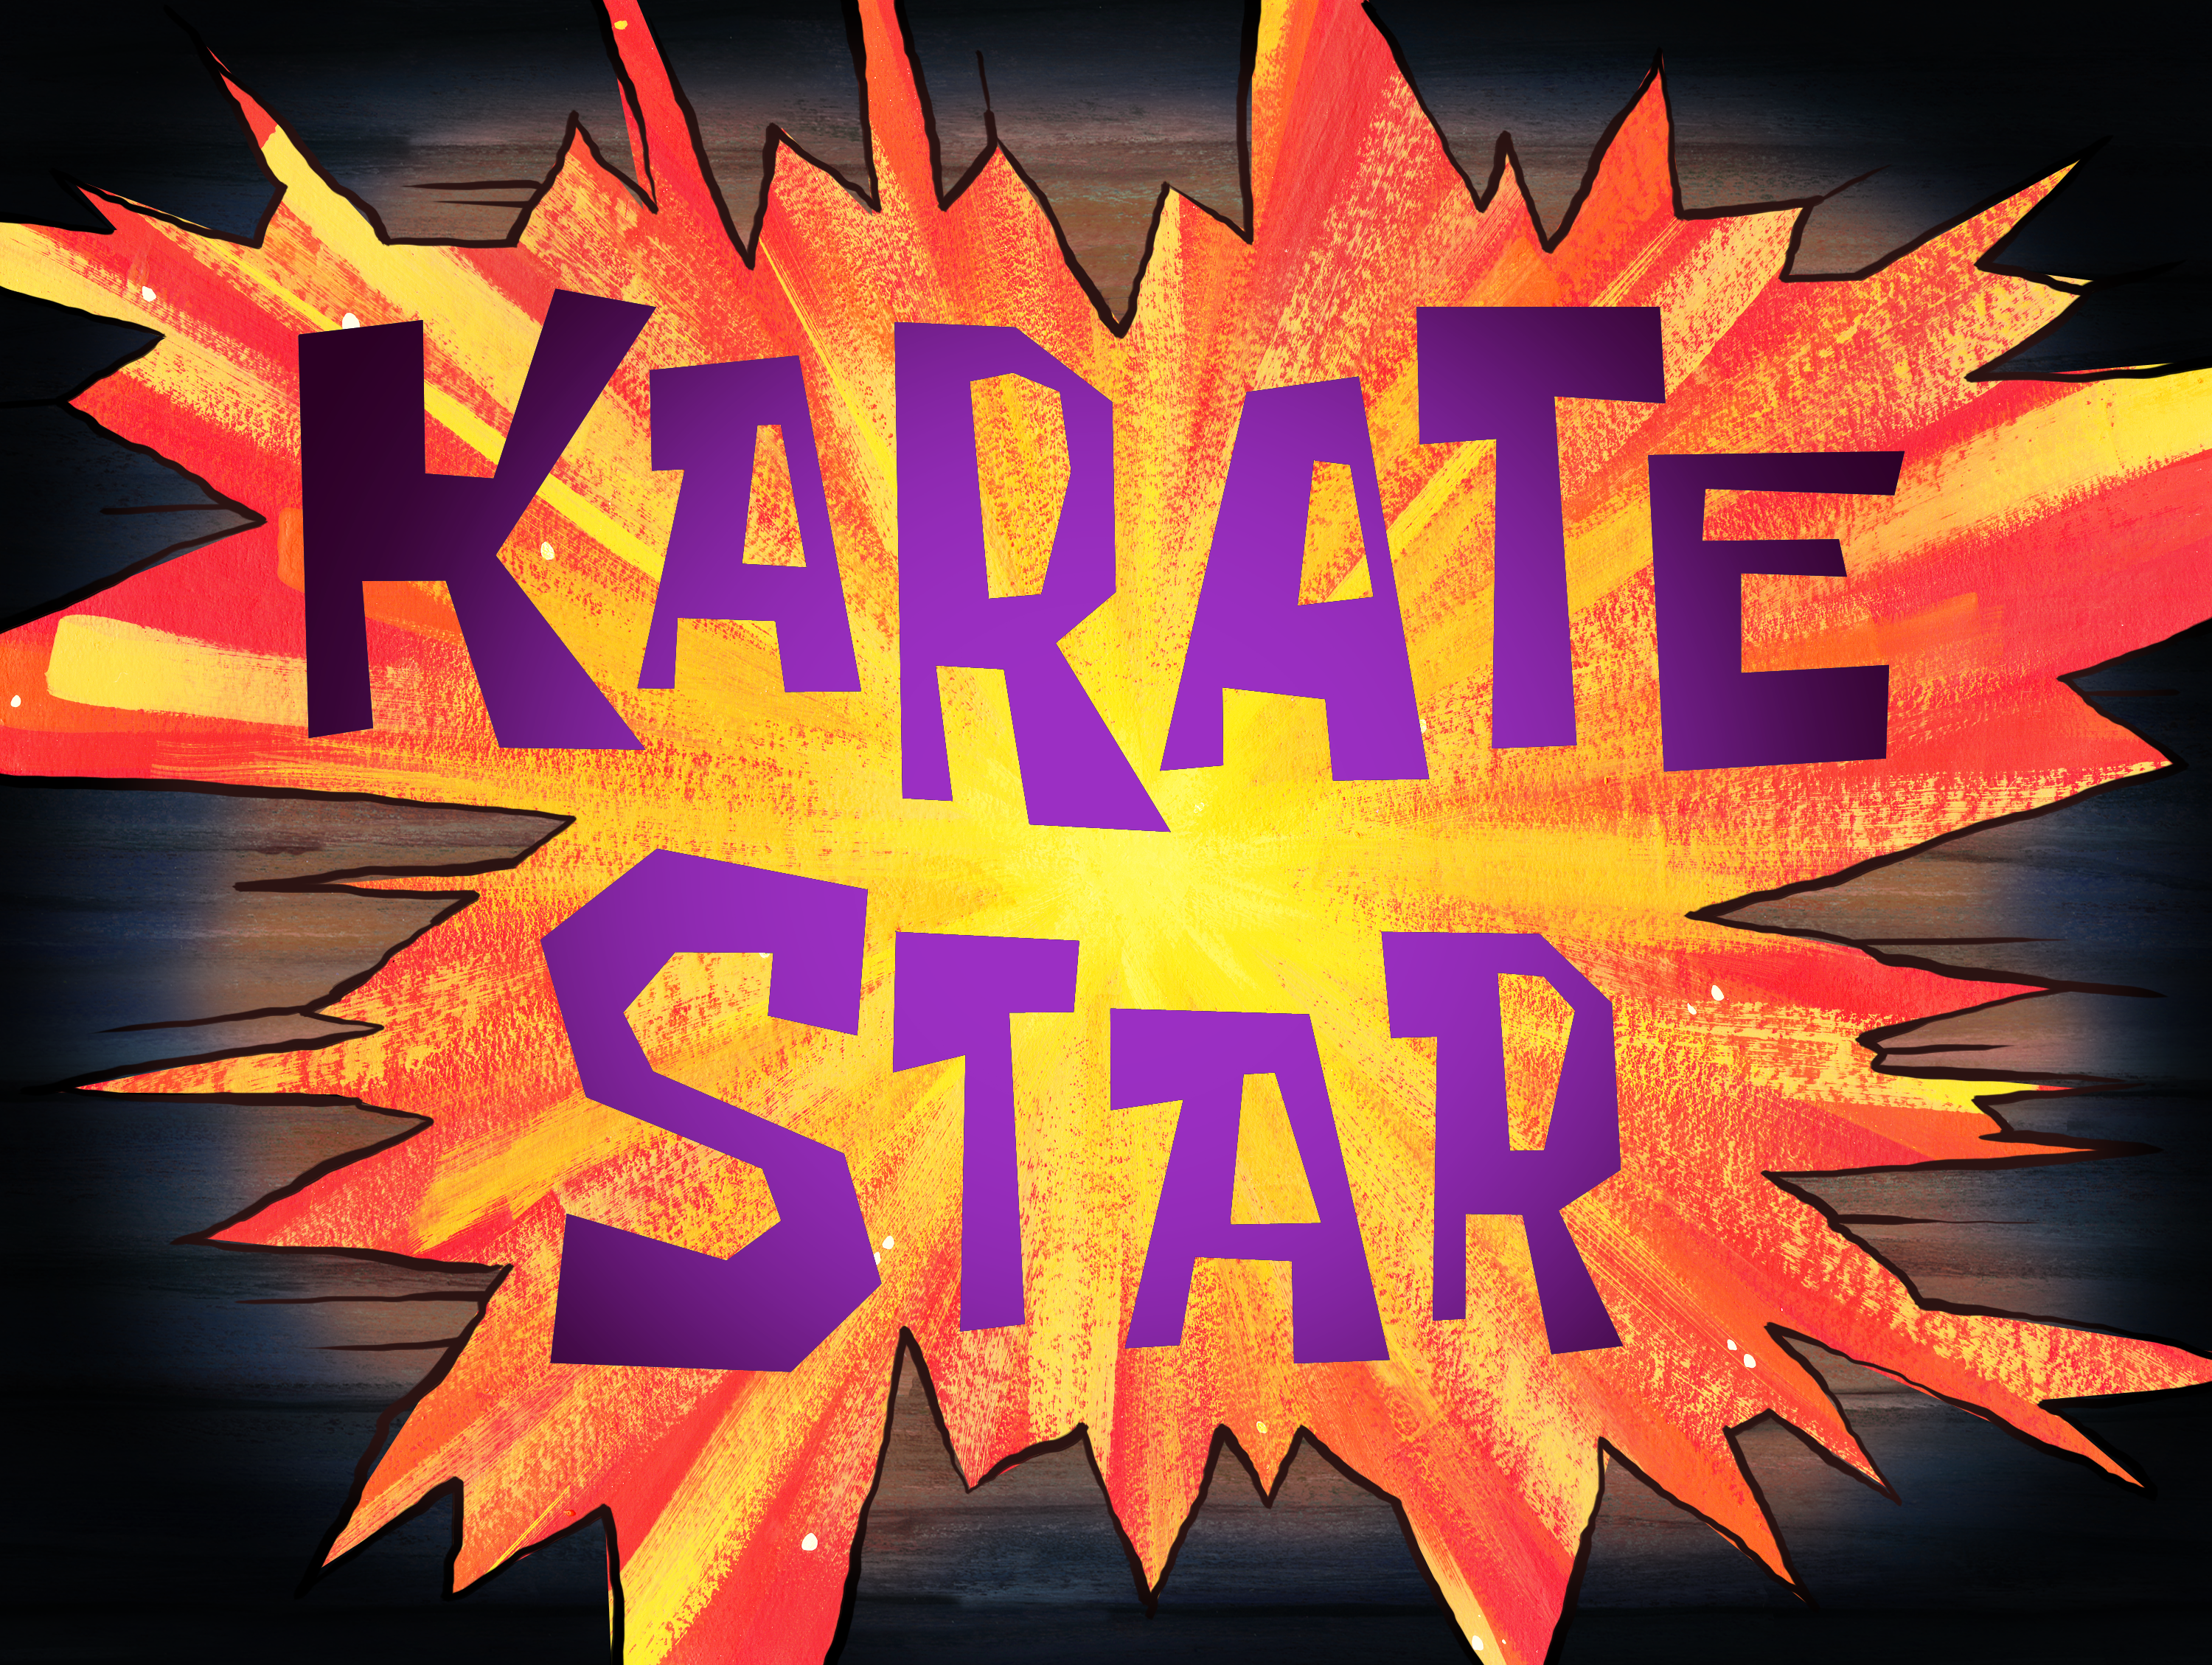 spongebob karate star